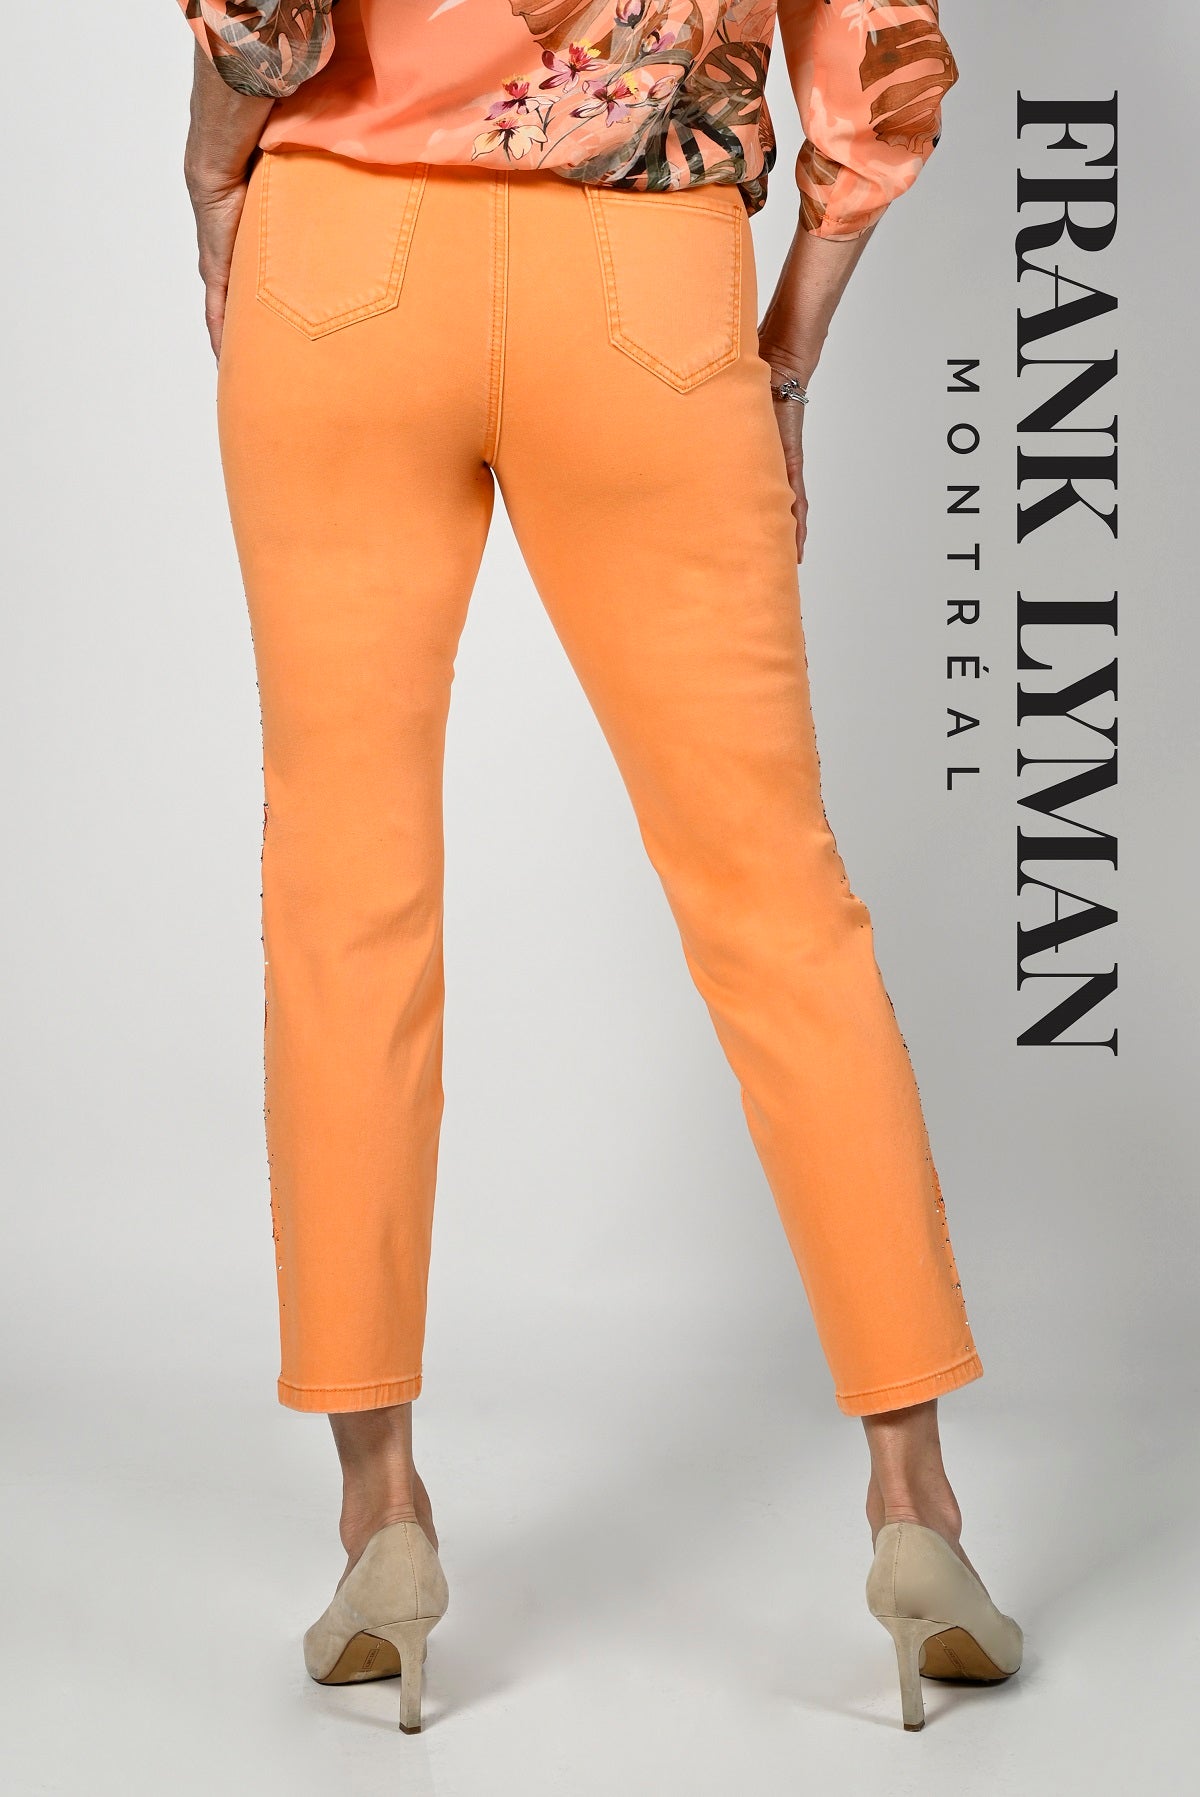 Buy Frank Lyman Montreal Jeans Online-Frank Lyman Montreal Tangerine Jeans-Frank Lyman Montreal Online Shop-Frank Lyman Montreal Spring 2023 Collection